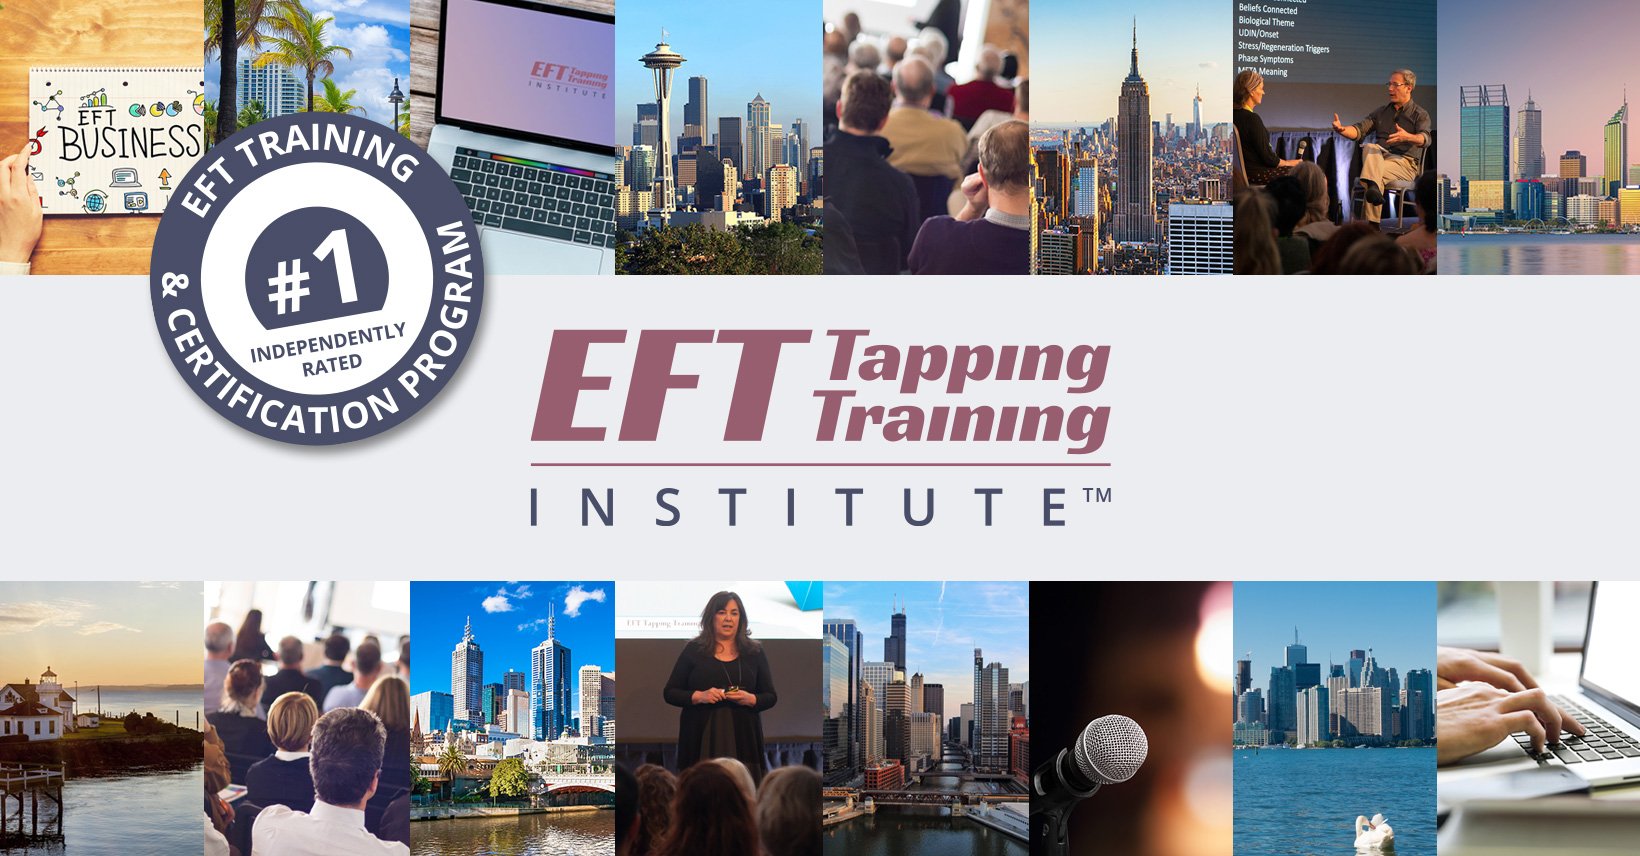 EFT Tapping Training Institute